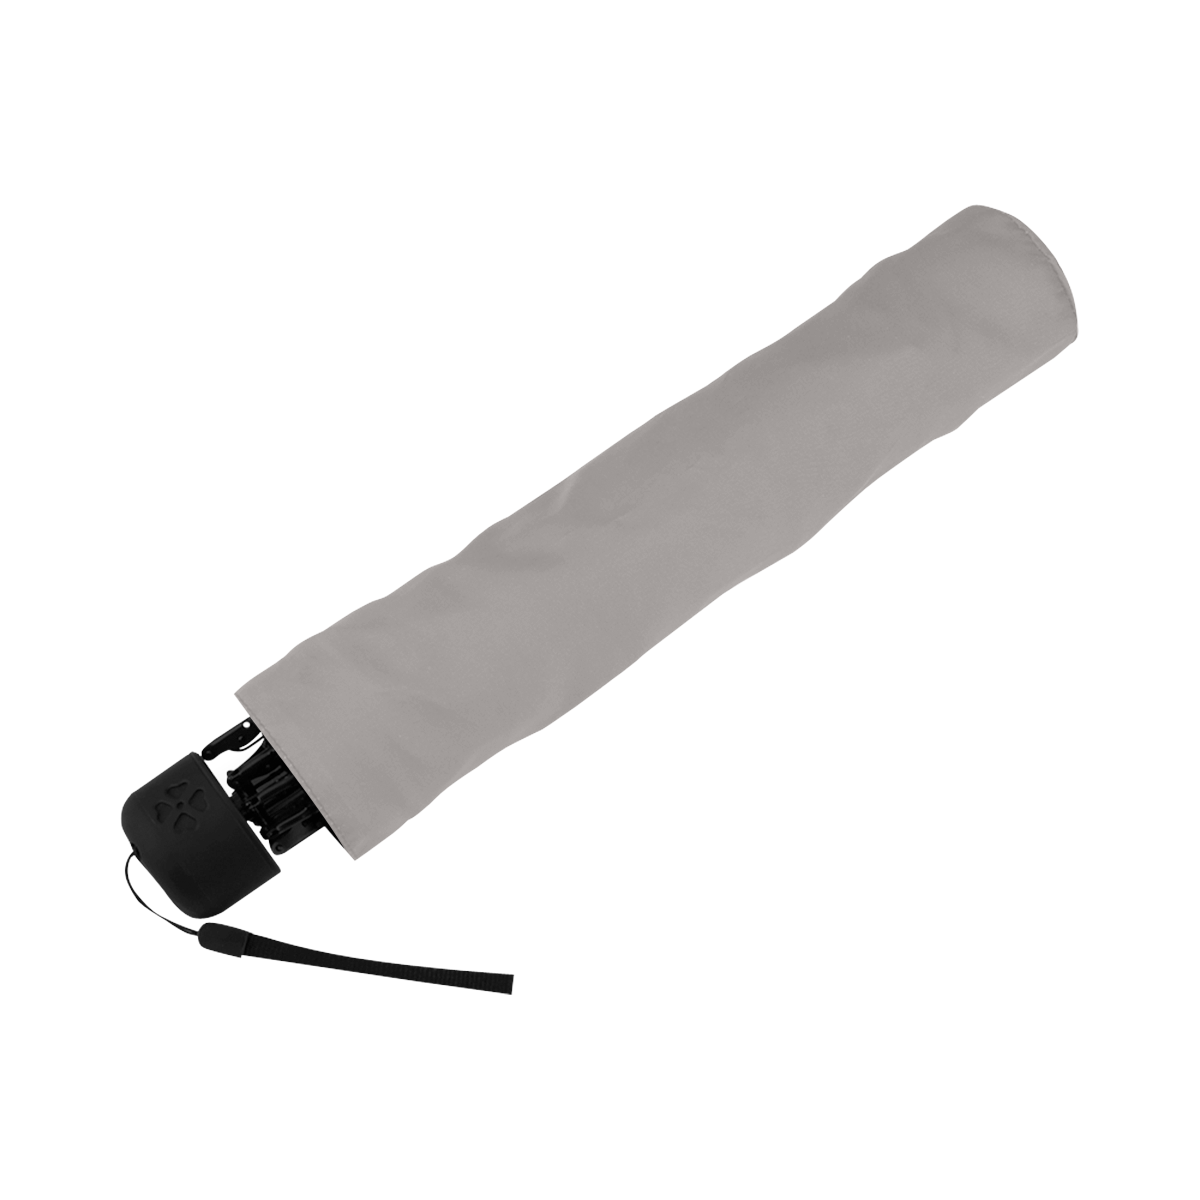 Ash Anti-UV Foldable Umbrella (U08) Anti-UV Foldable Umbrella (U08)